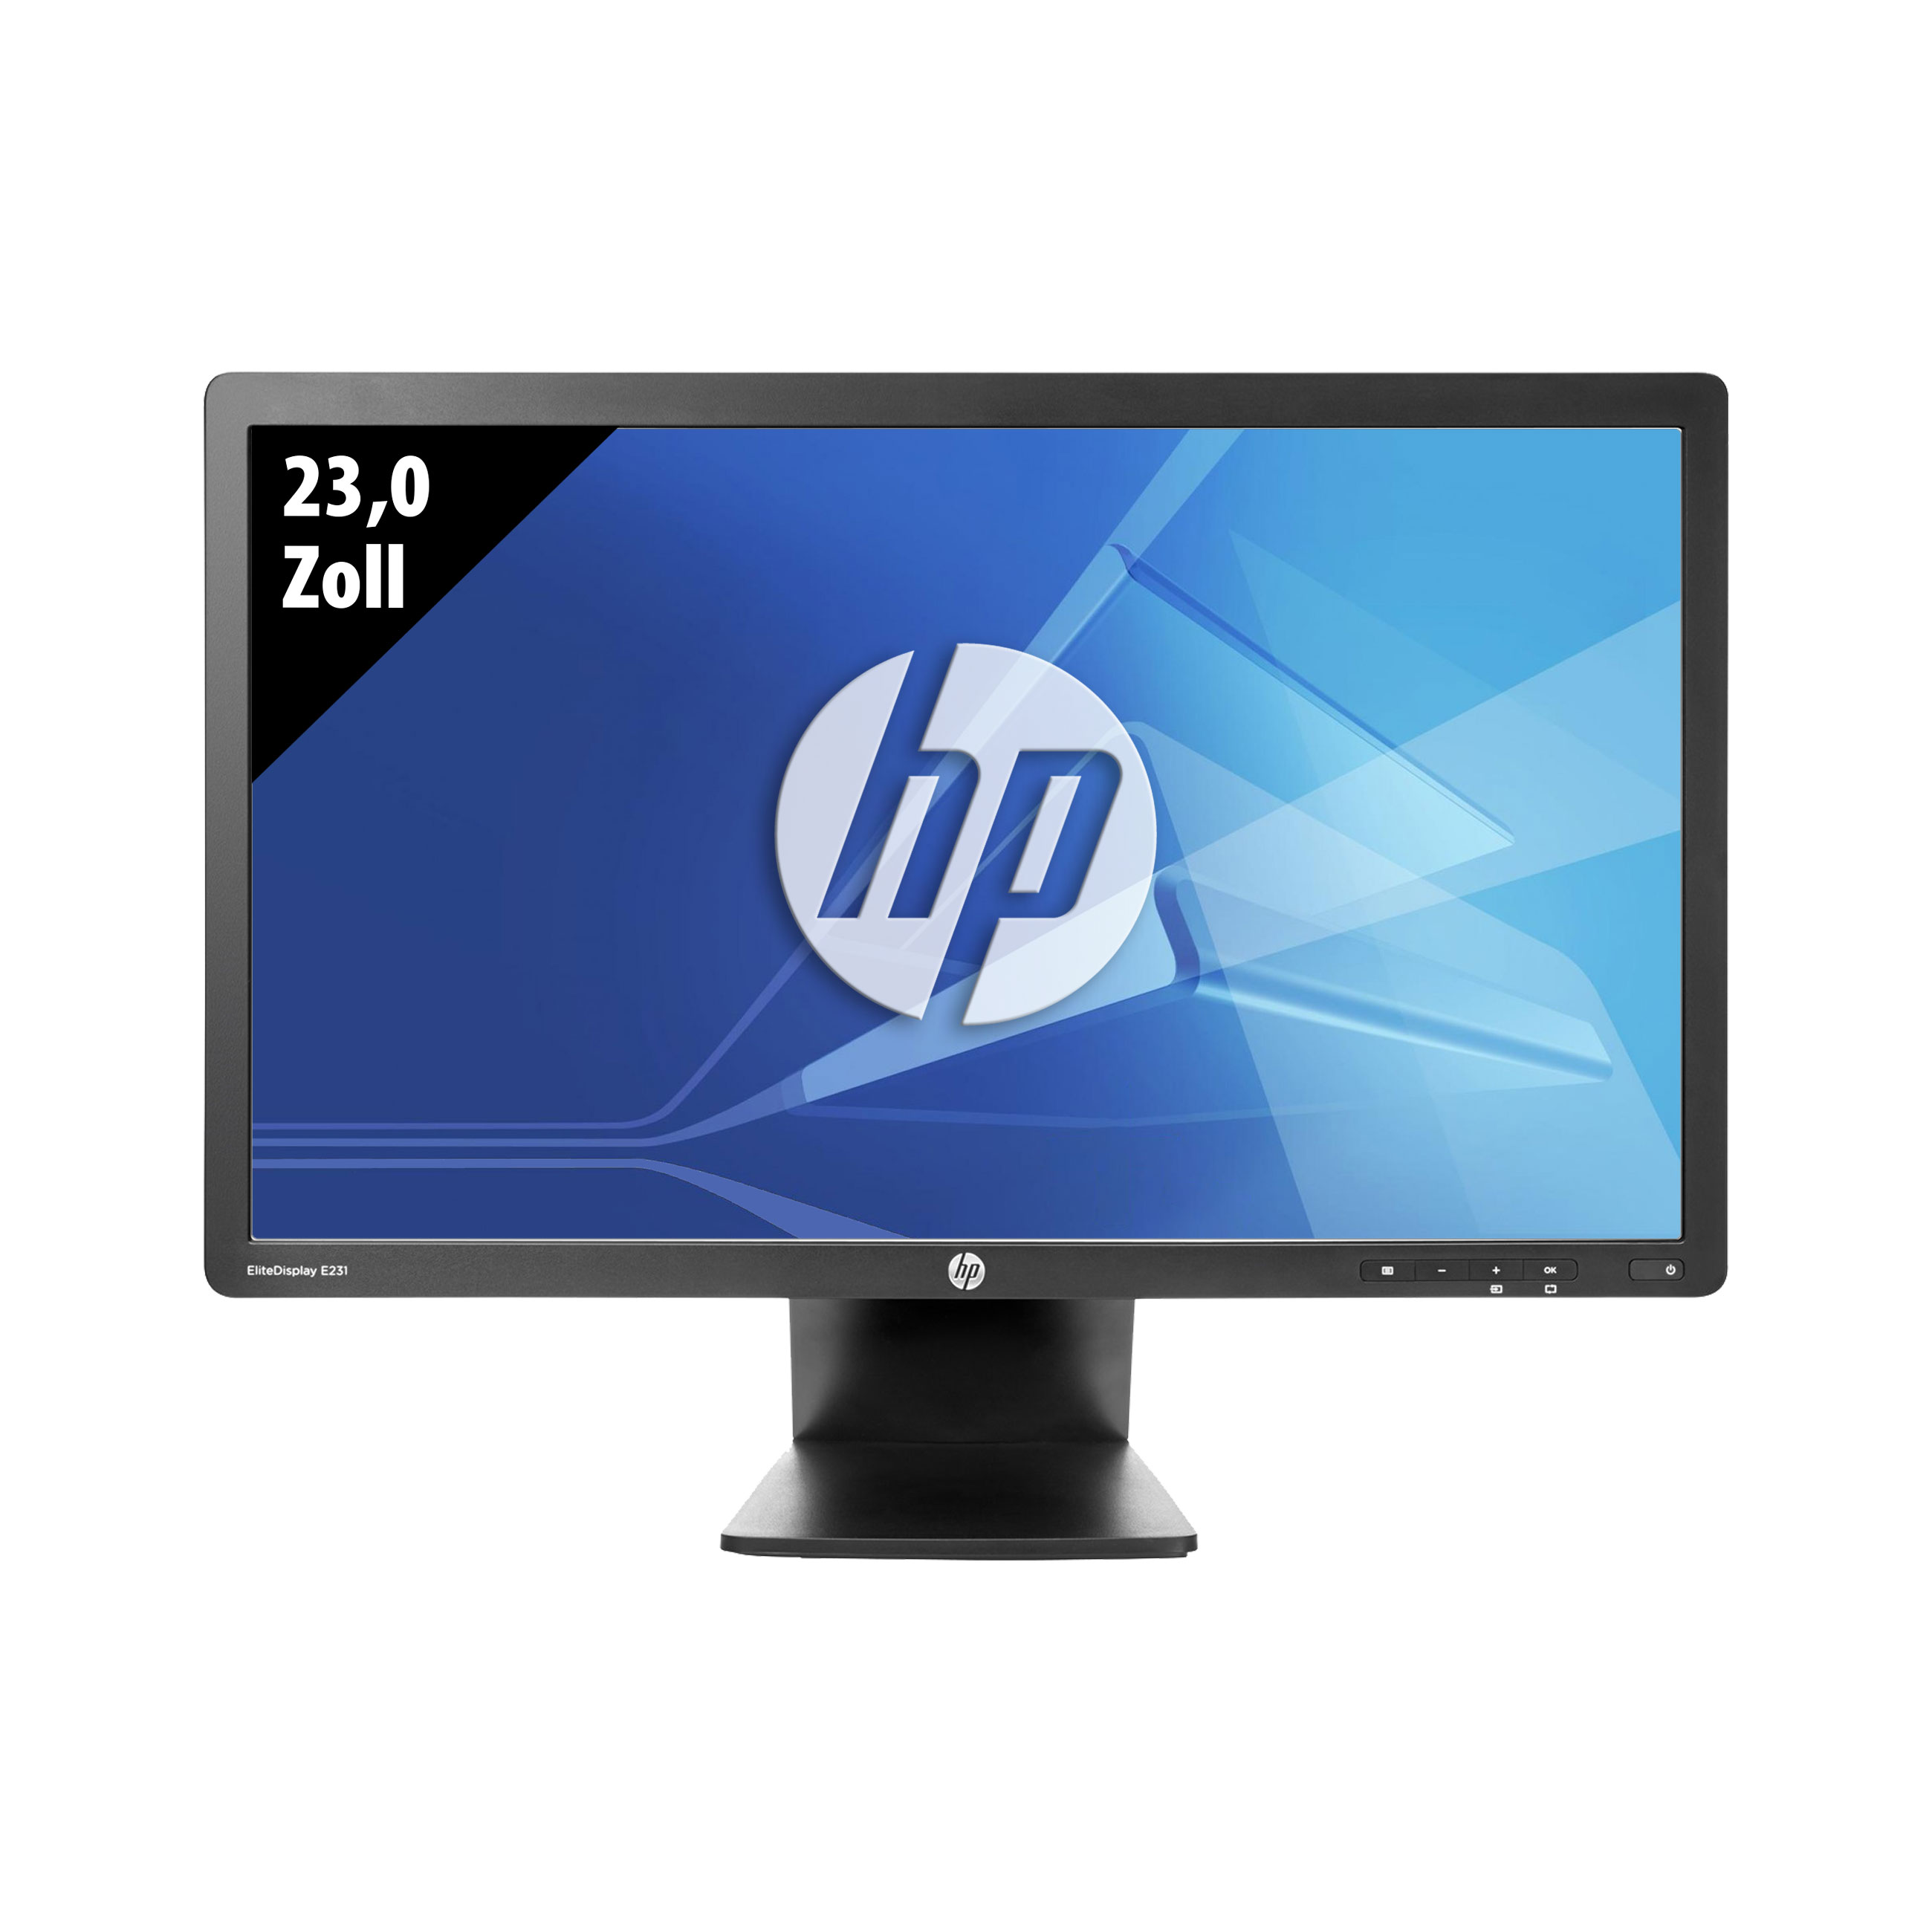 HP EliteDisplay E231 - 23,0 Zoll - 1920 x 1080 FHD - 5 ms - Schwarz